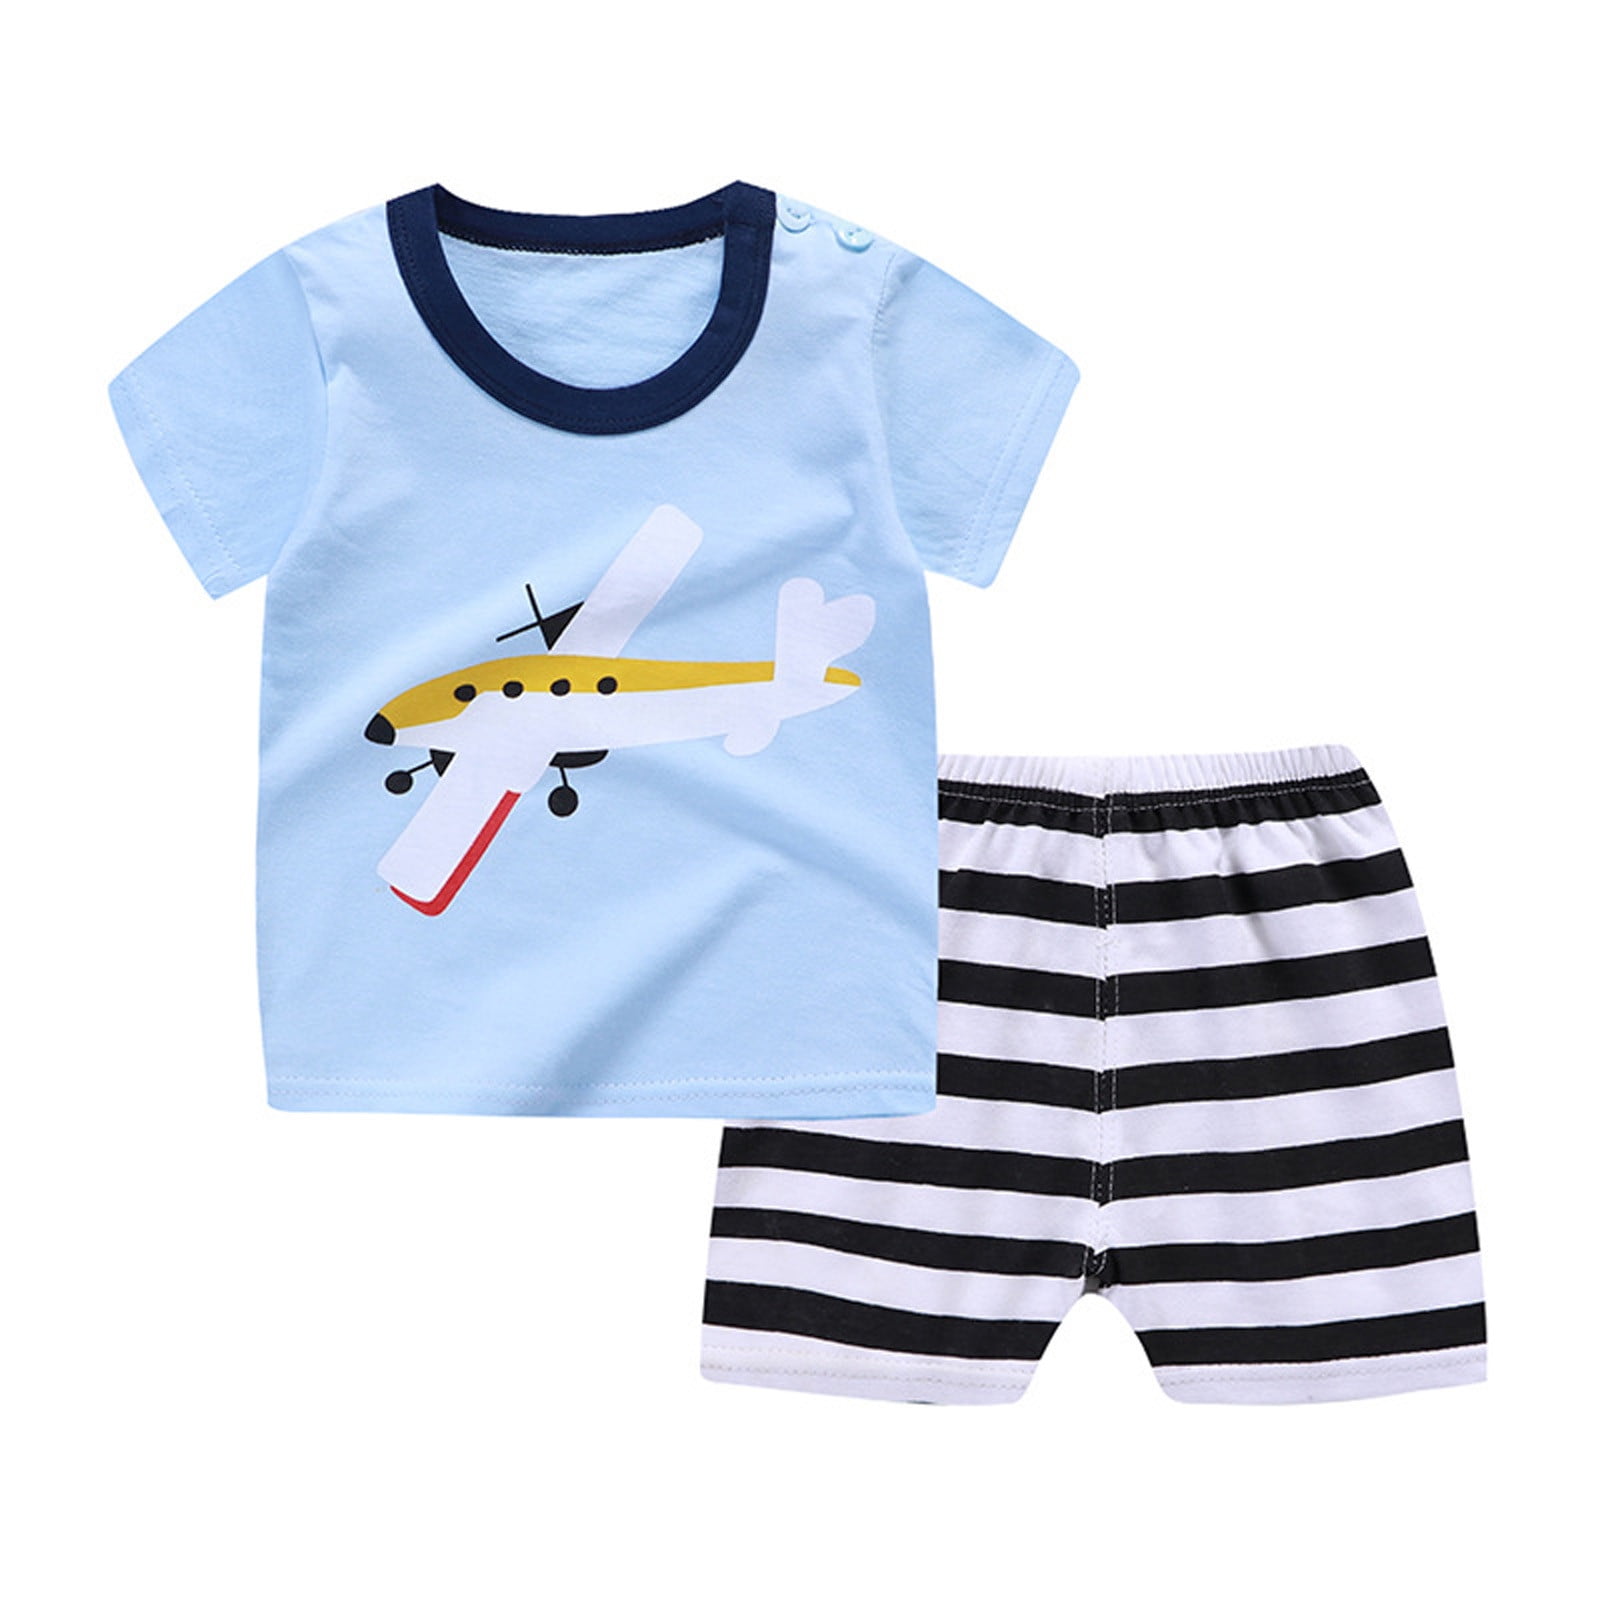  Baby Boy Girl Clothes OutfitsCottonPrinted